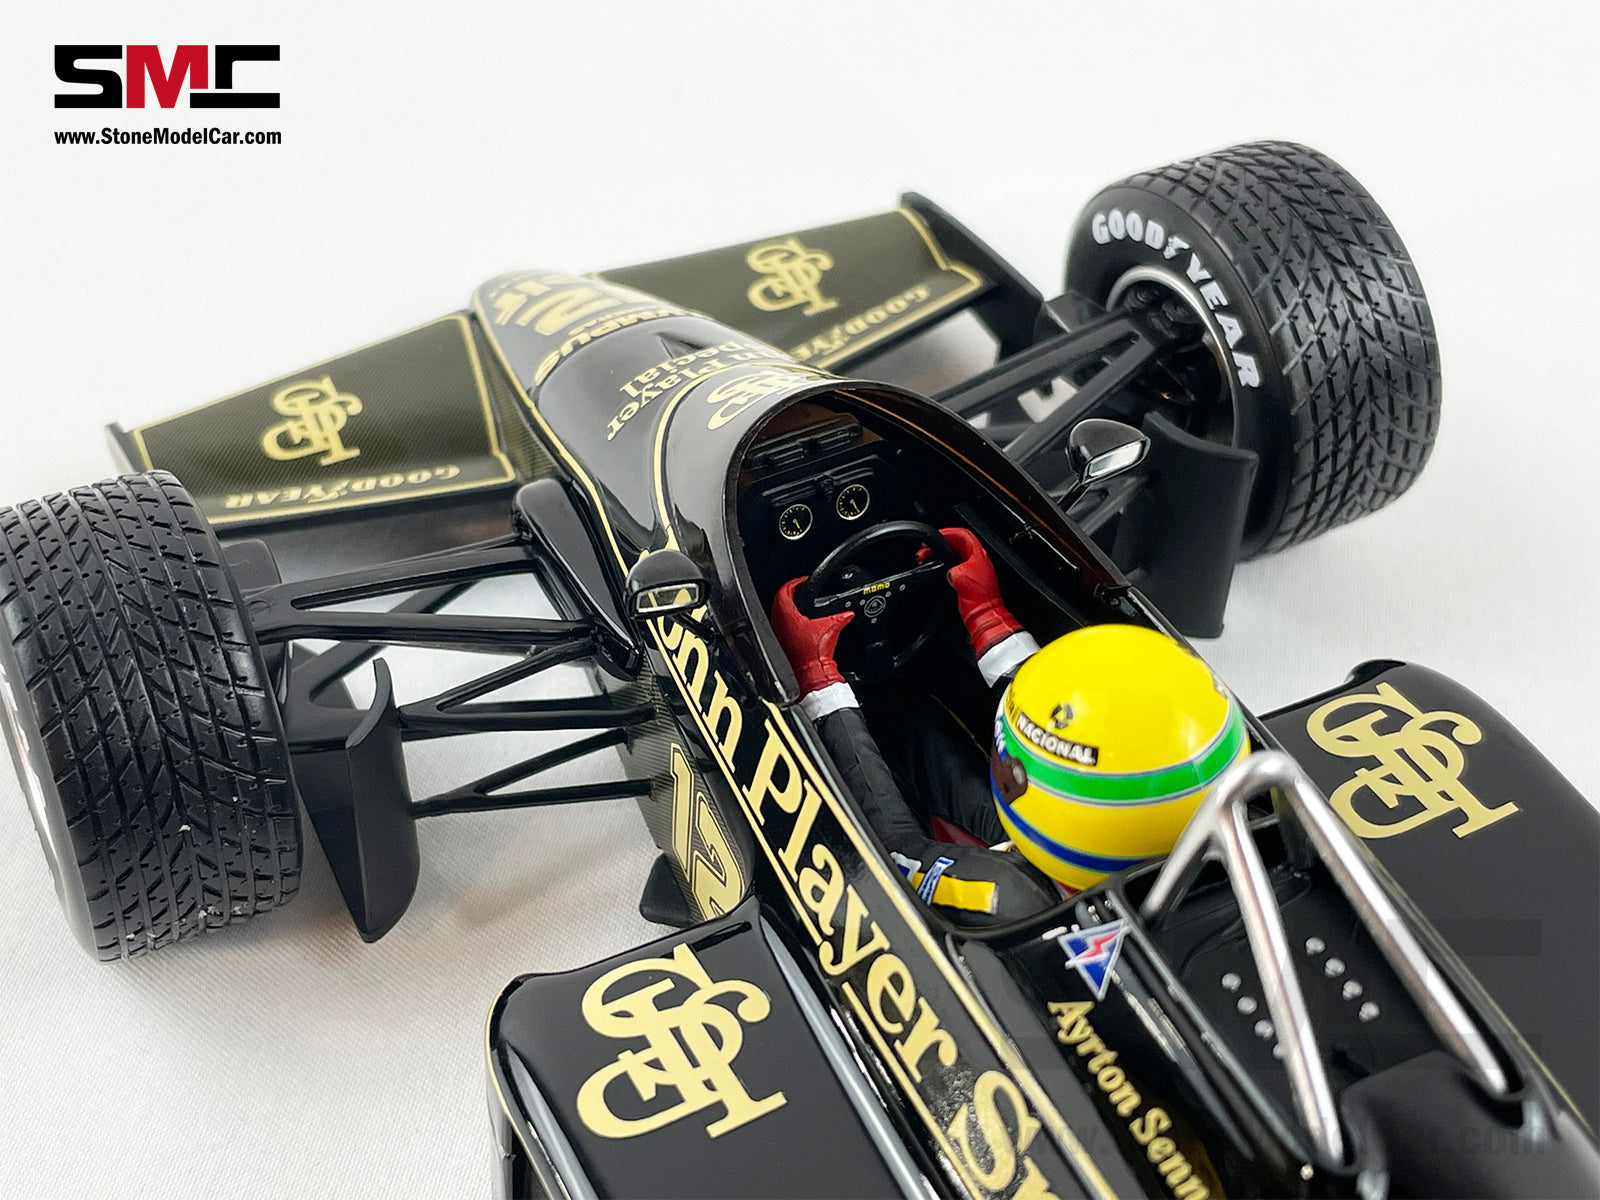 Lotus F1 97T #12 Ayrton Senna Portugal GP 1985 1st Career Win 1:18  MINICHAMPS with Decal